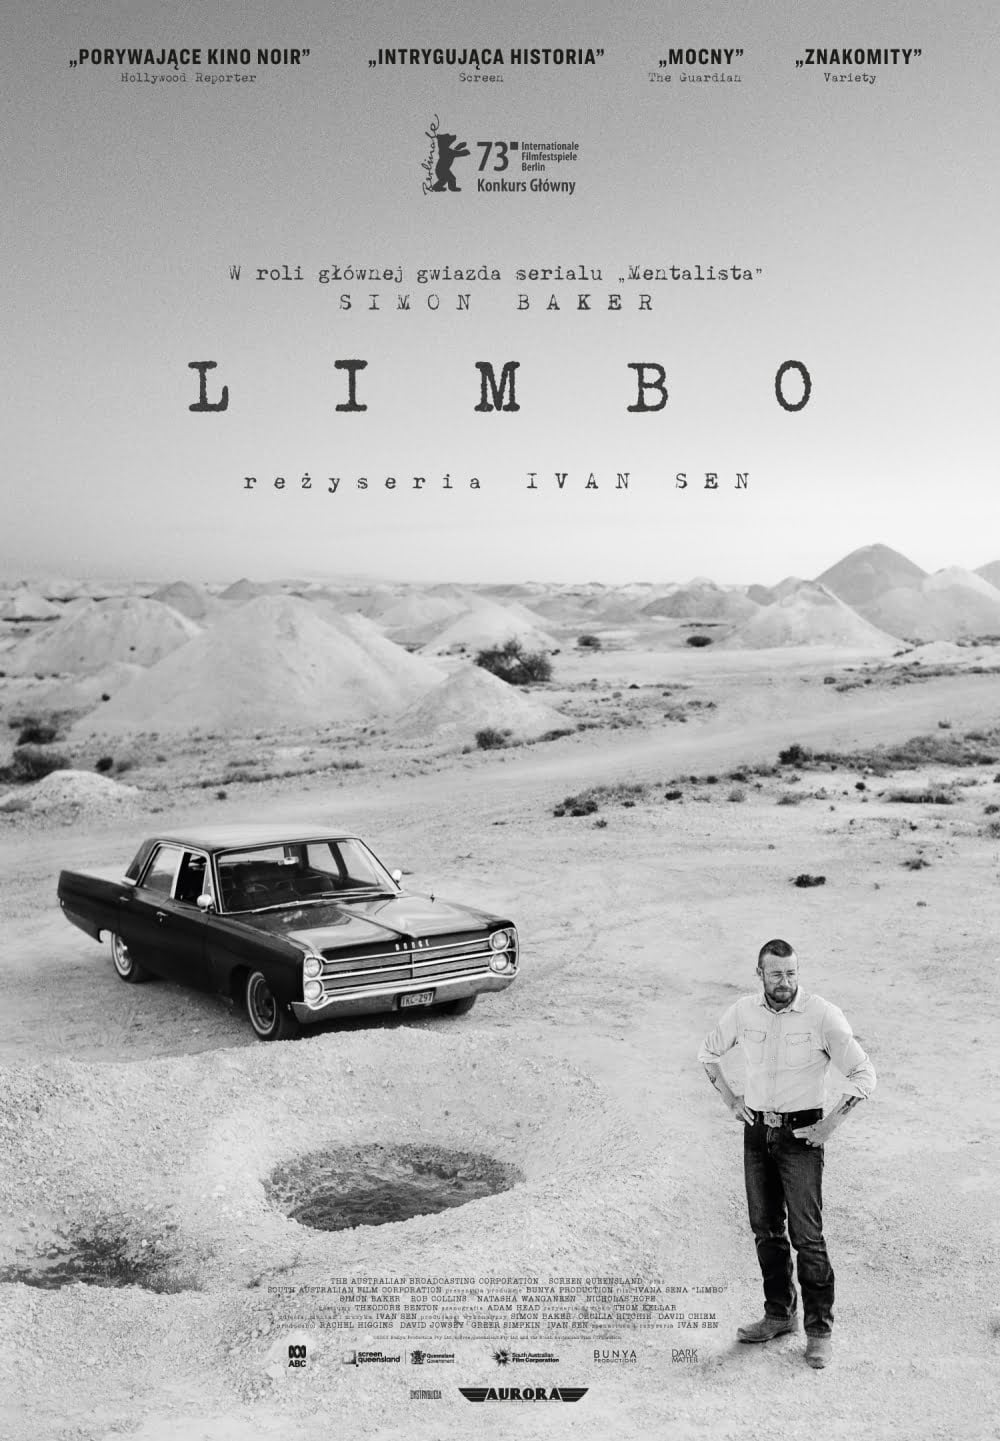 Limbo (520581)